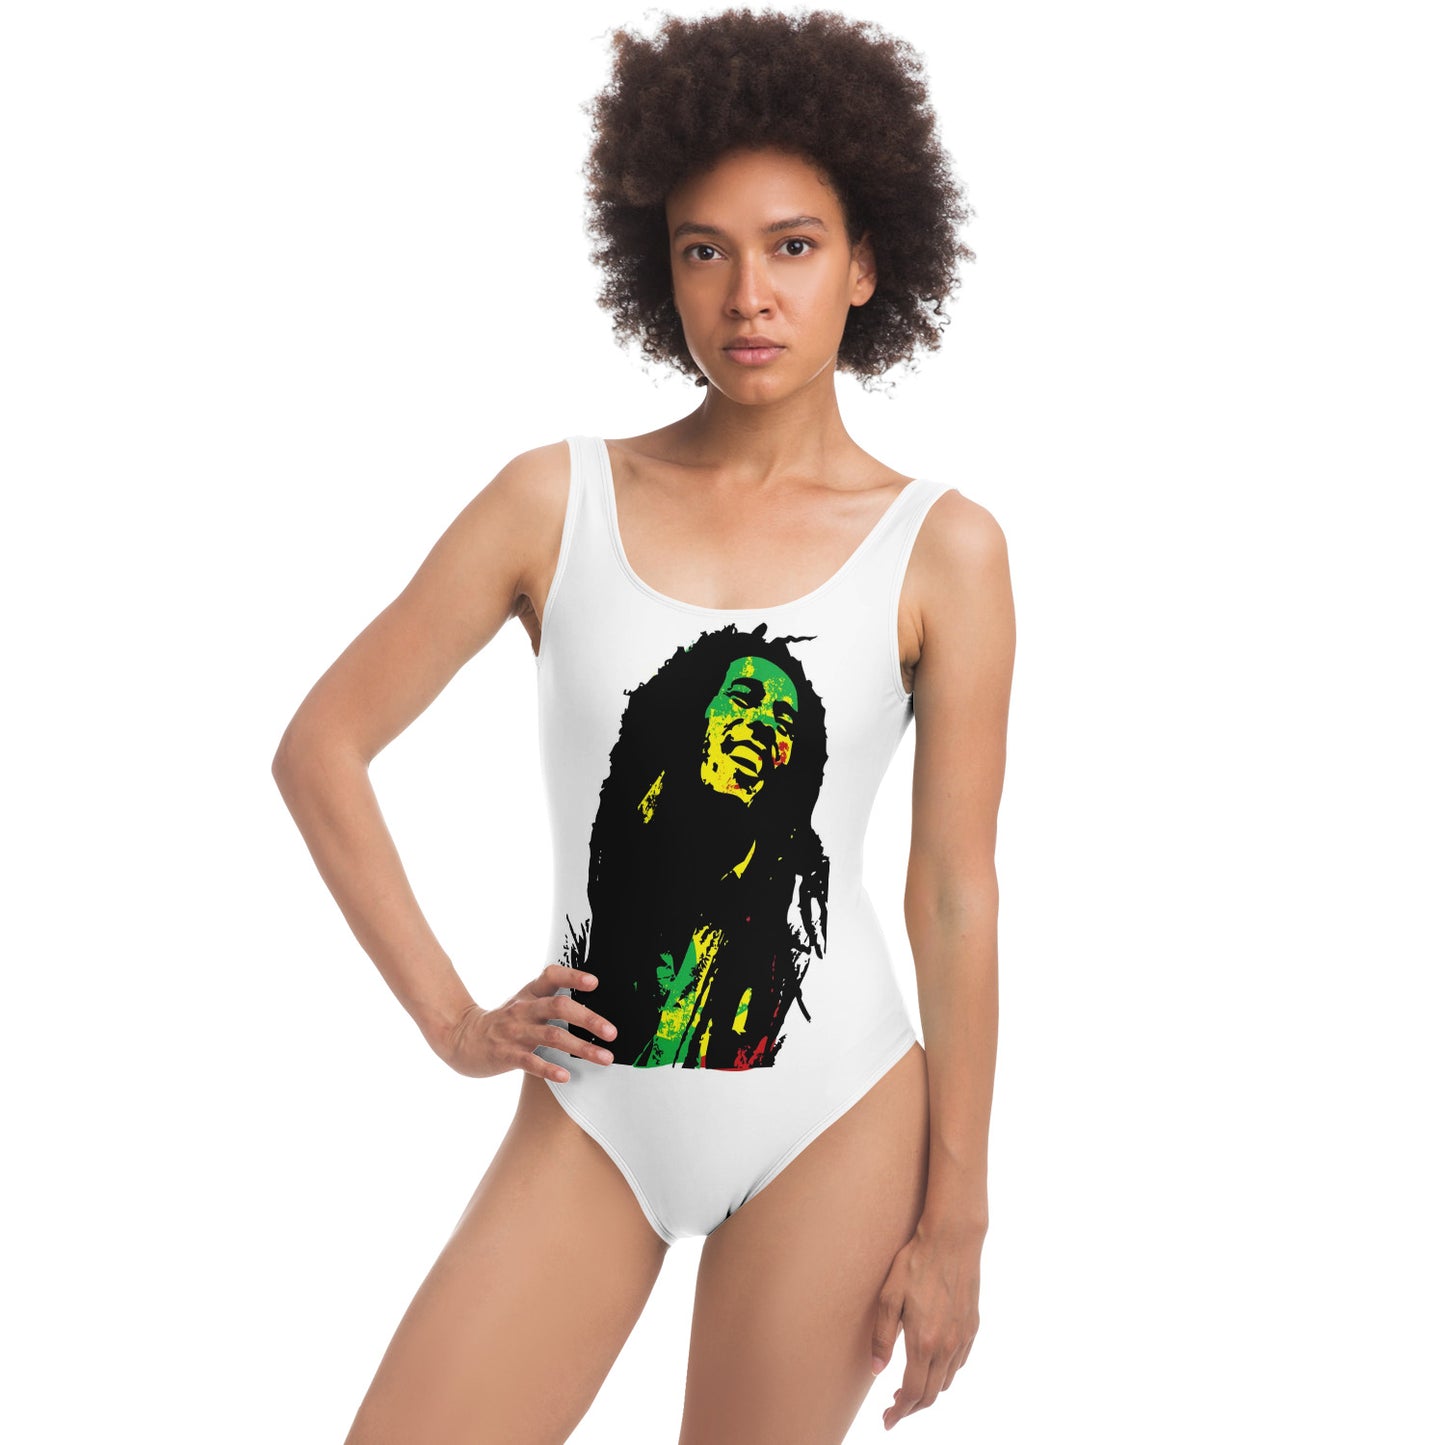 Bob Marley - One-Piece Swimsuit